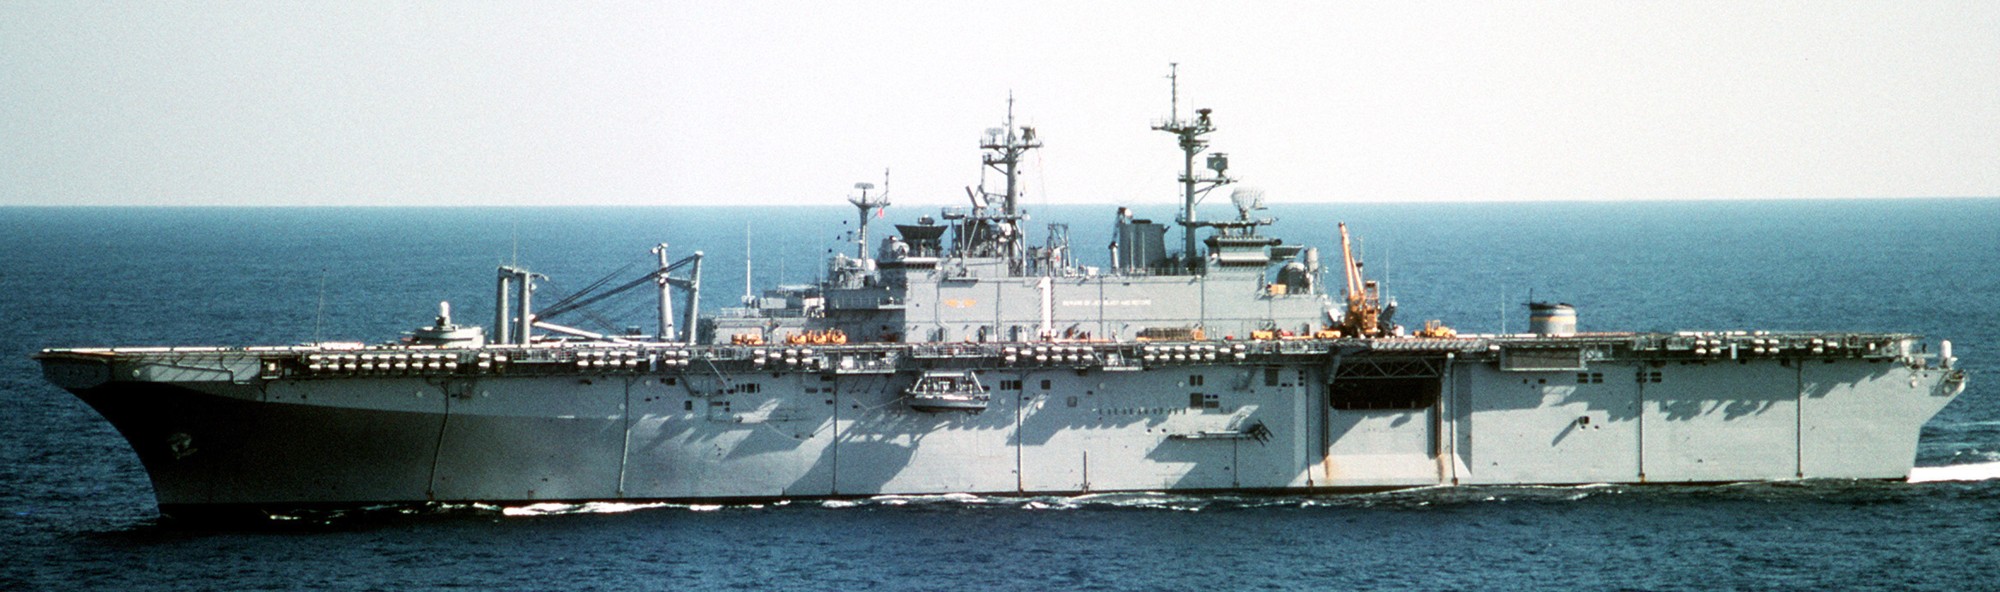 lhd-1 uss wasp amphibious assault landing ship dock helicopter us navy 68